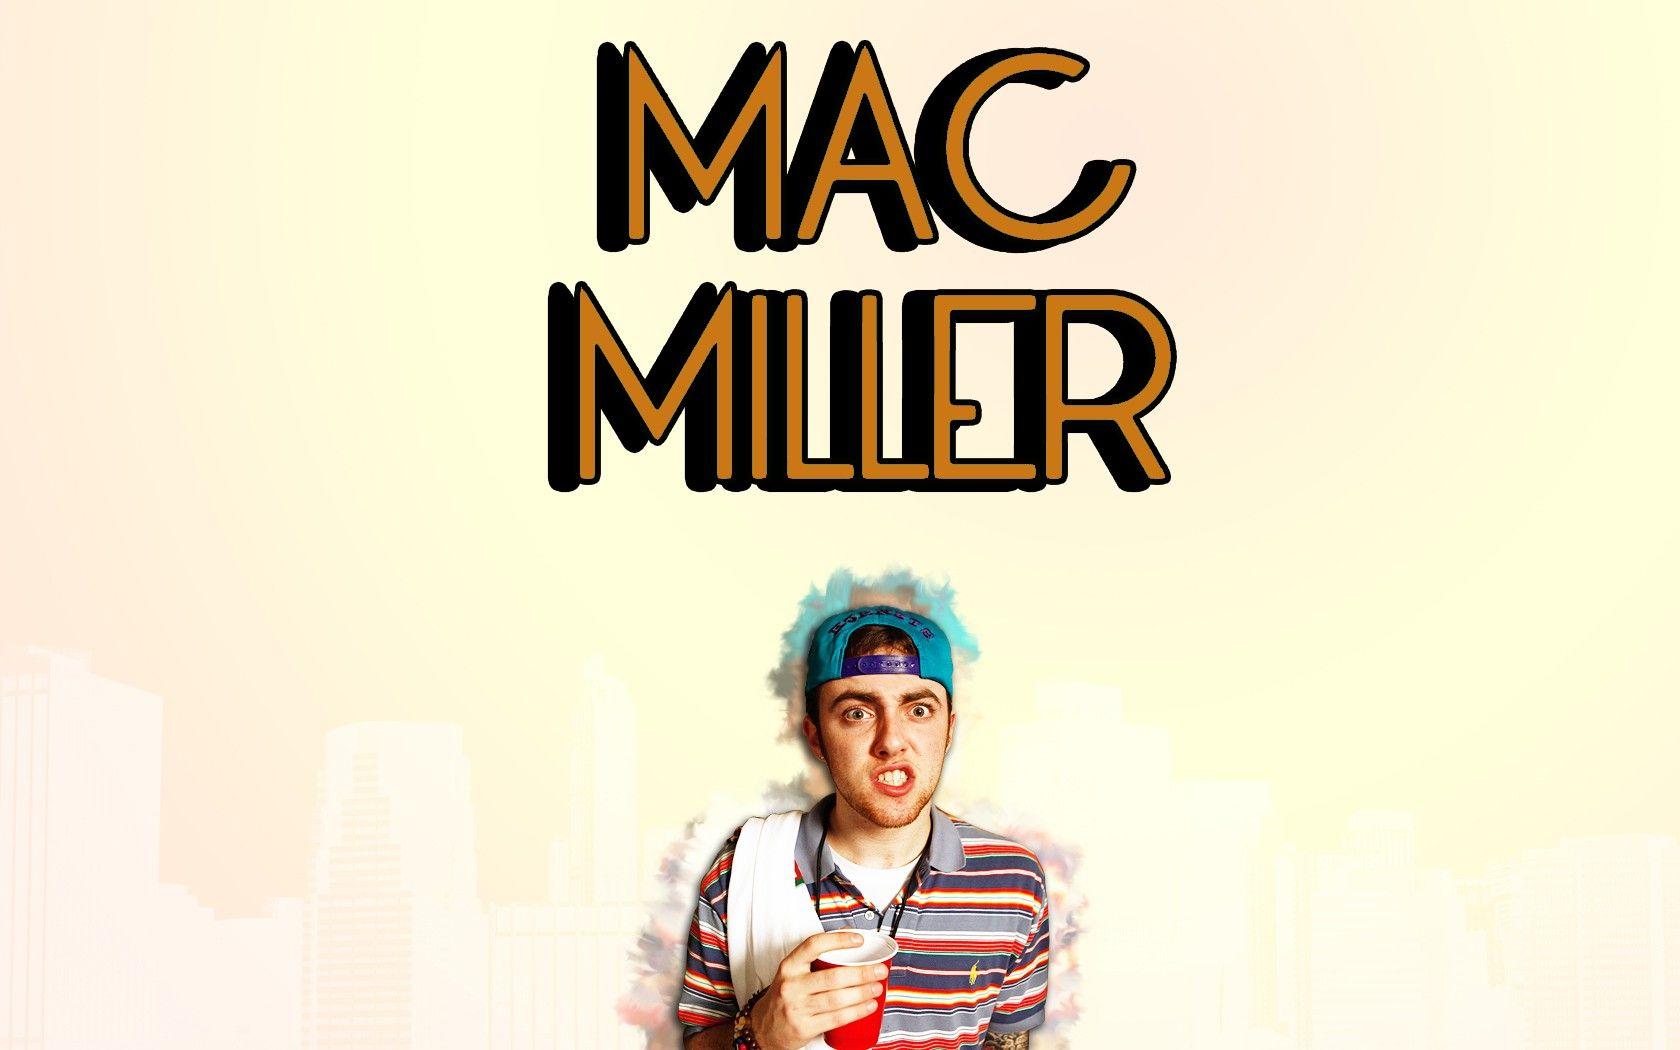 Mac Miller Wallpaper. Epic Car Wallpaper. Mac miller